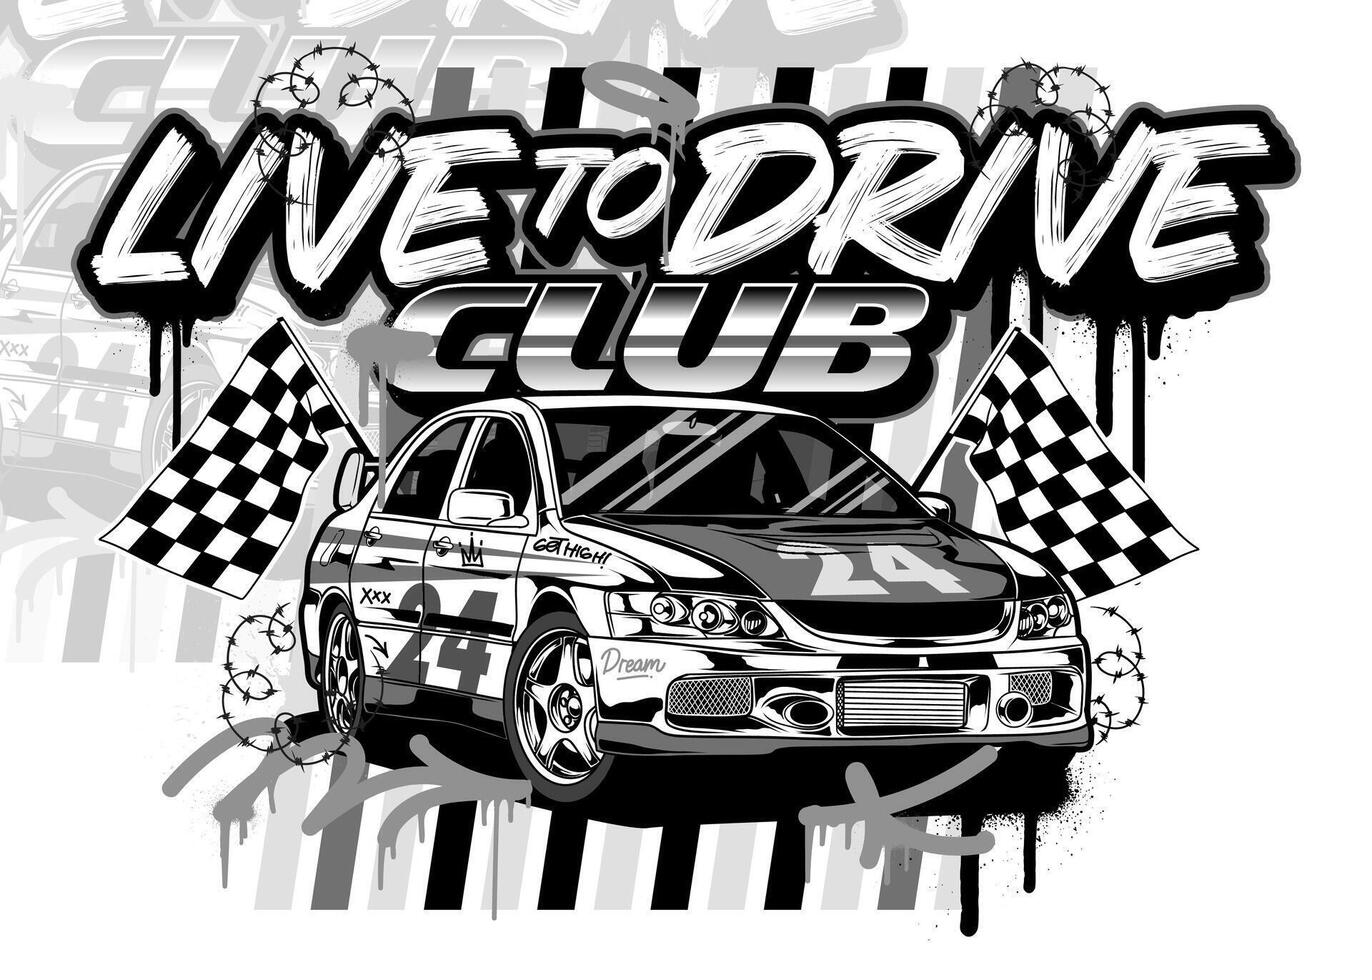 Car Graffiti Illustration. Street racing car illustration in graffiti style. vector